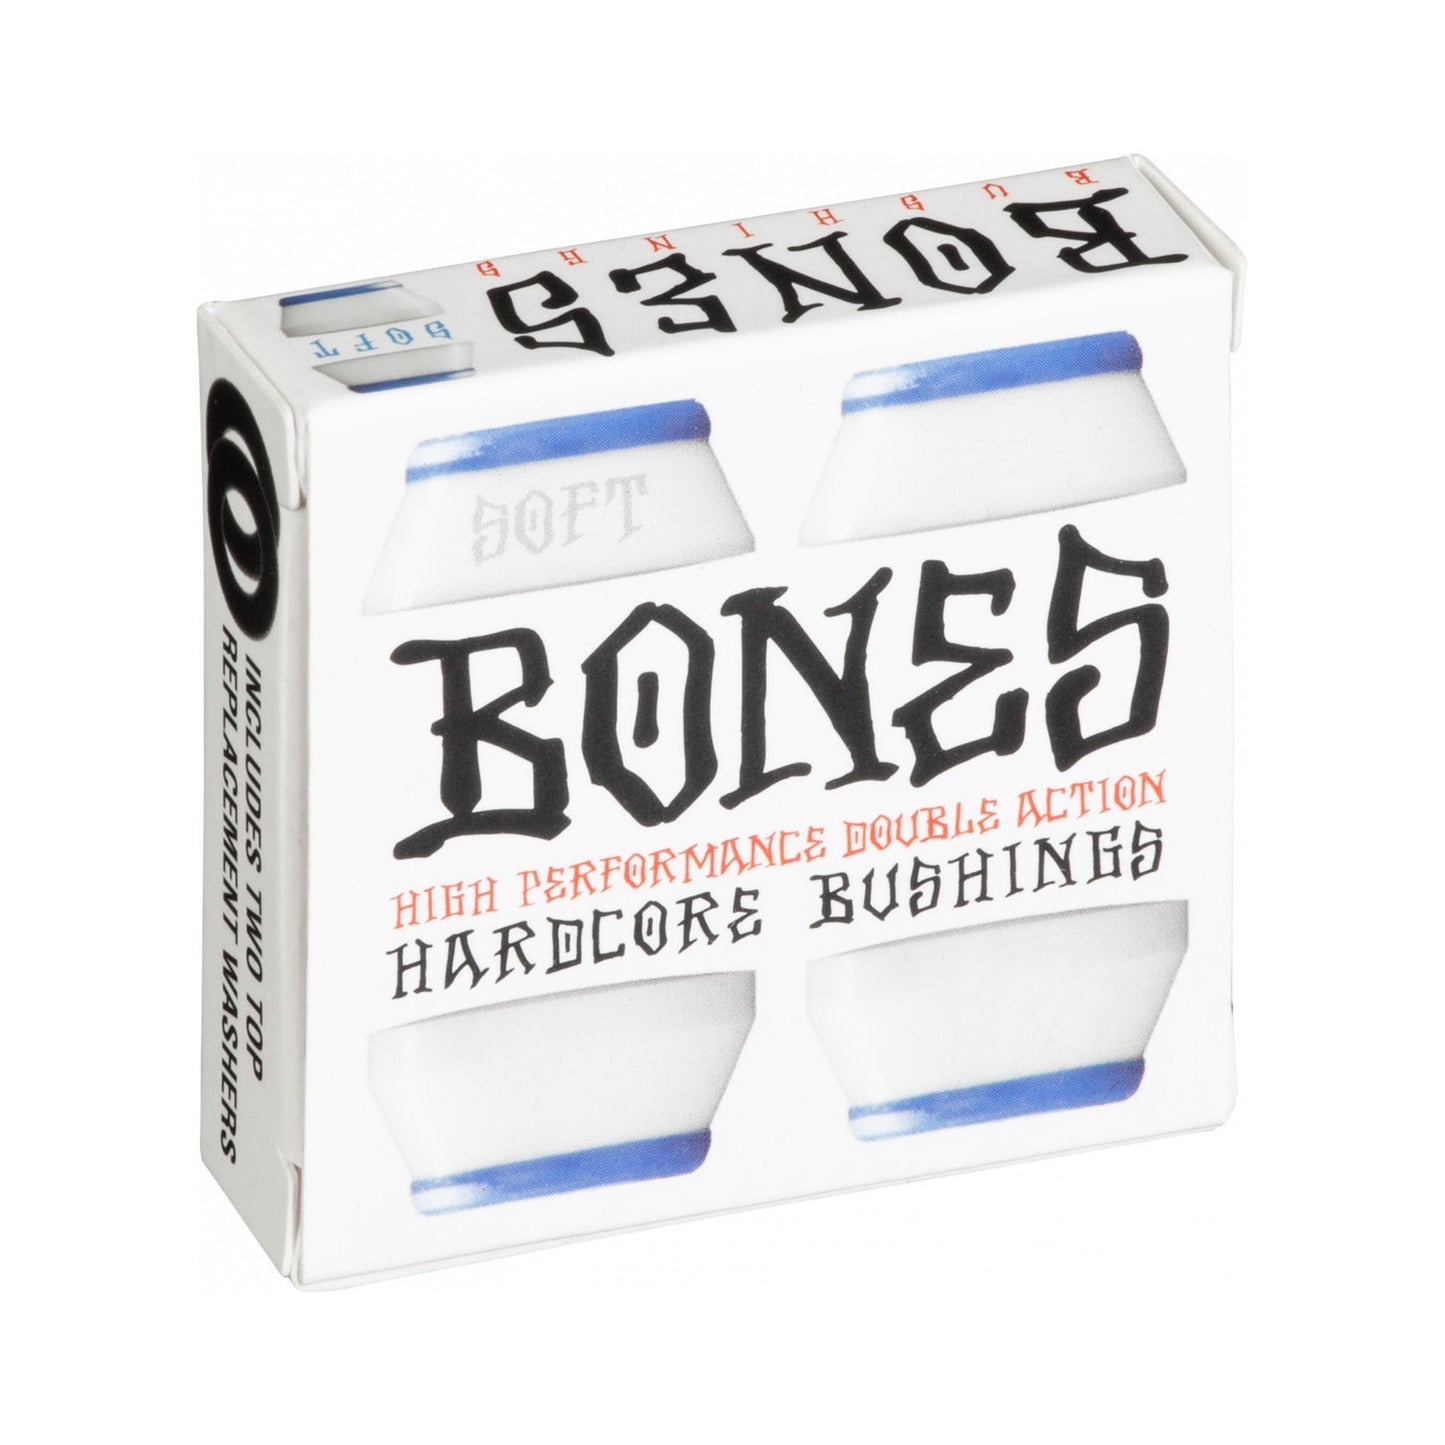 Bones Hardcore Bushings- Soft